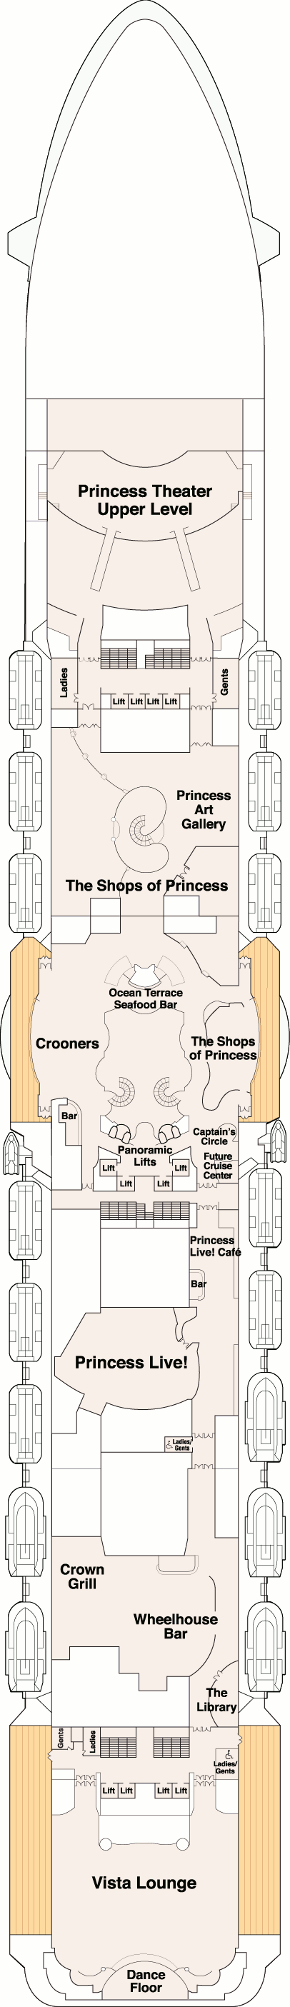 Regal Princess Promenade Deck Deck Plan